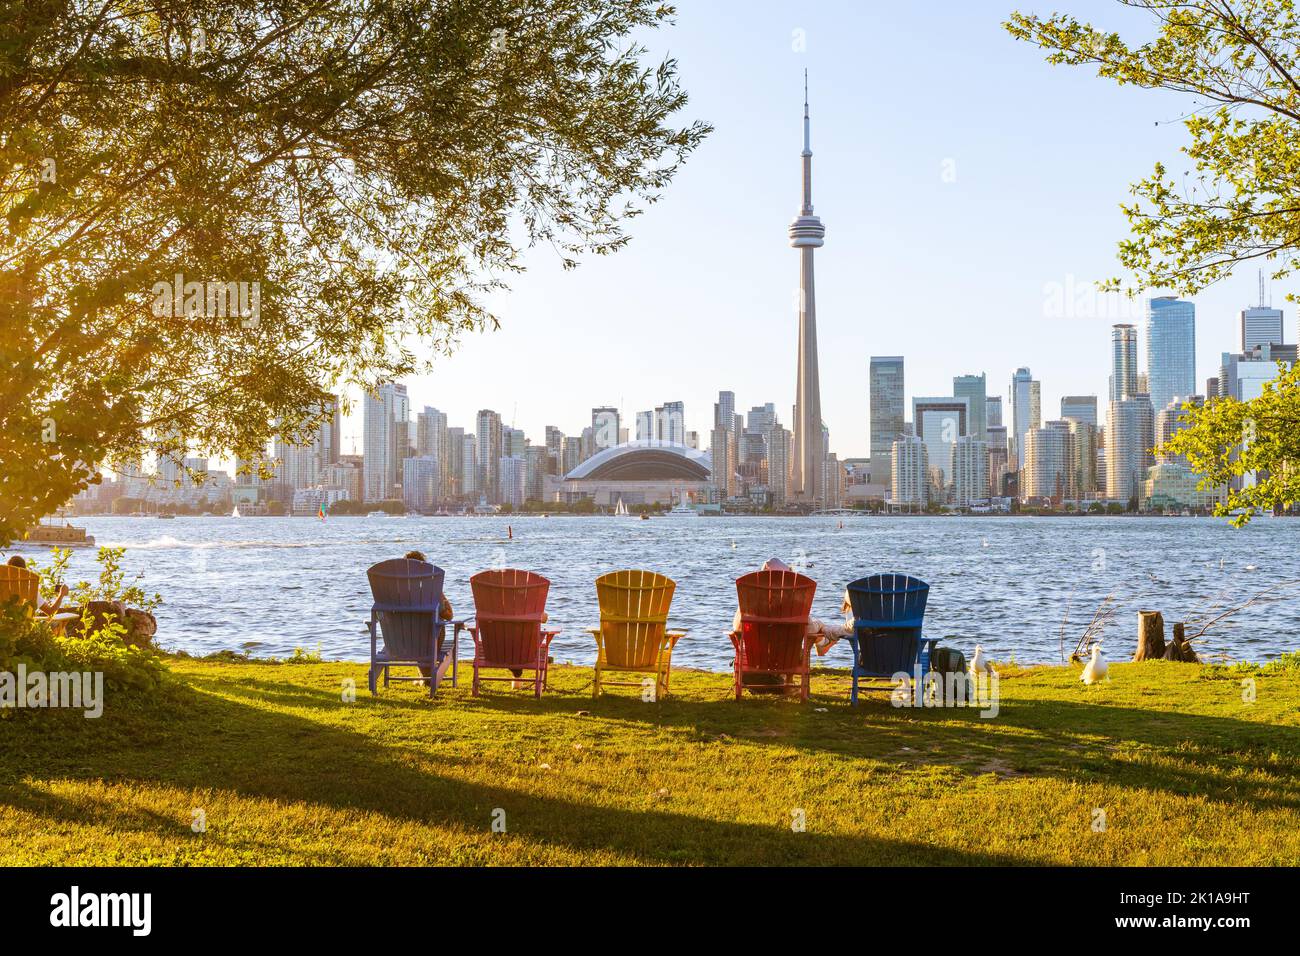 Farbenfrohe Adirondack-Stühle im Toronto Island Park bei Sonnenuntergang. Toronto City Downtown Skyline im Hintergrund. Ontario, Kanada. Stockfoto